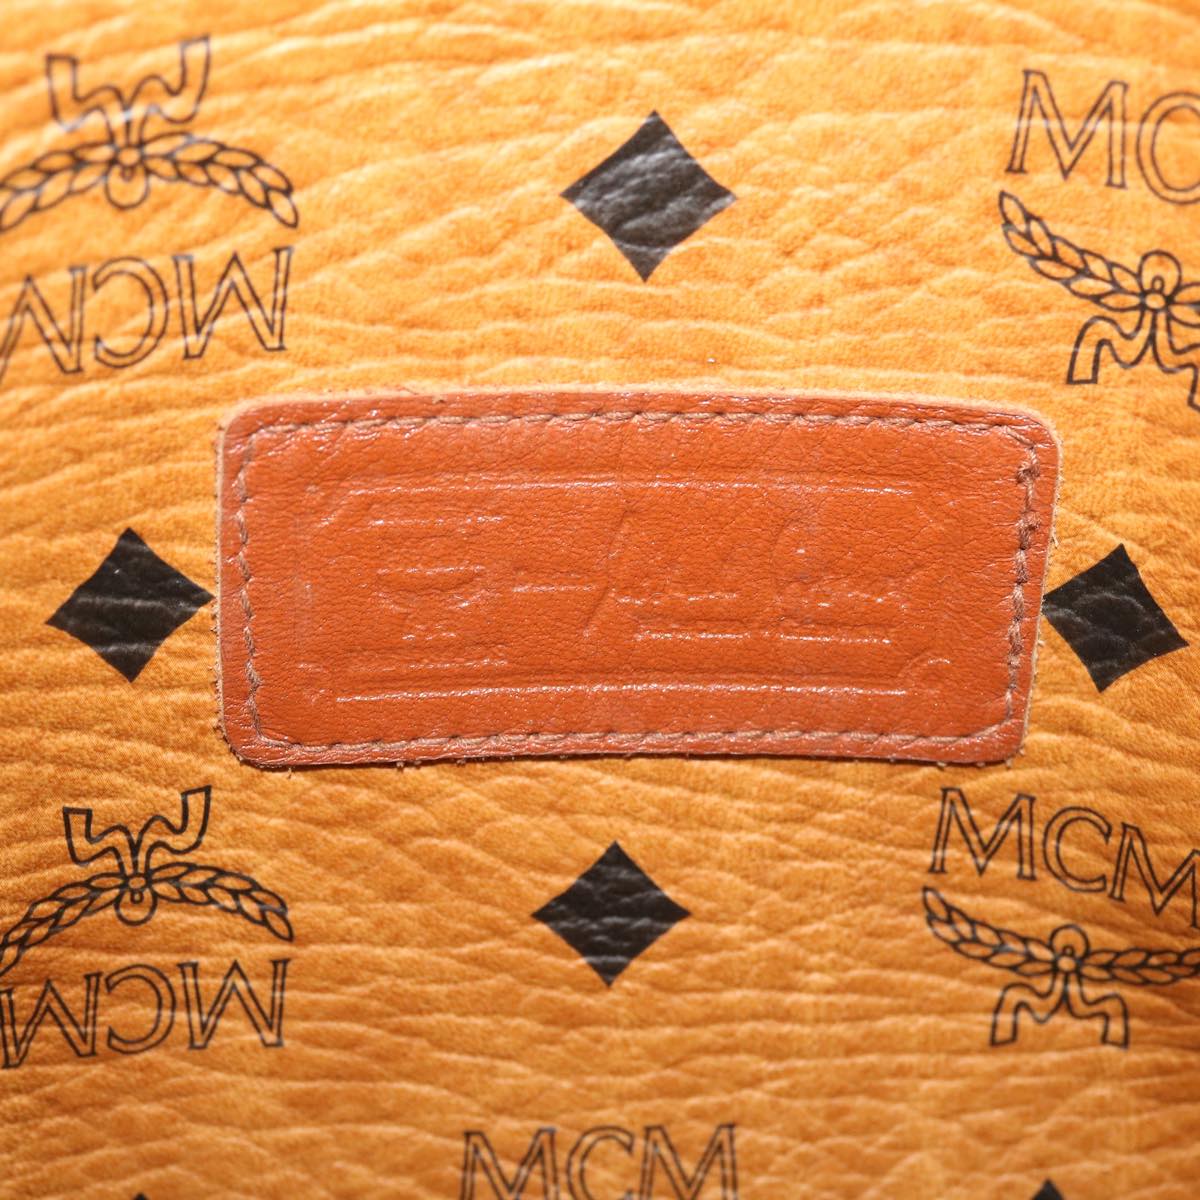 MCM Vicetos Logogram Shoulder Bag PVC Leather Brown Auth yk4908